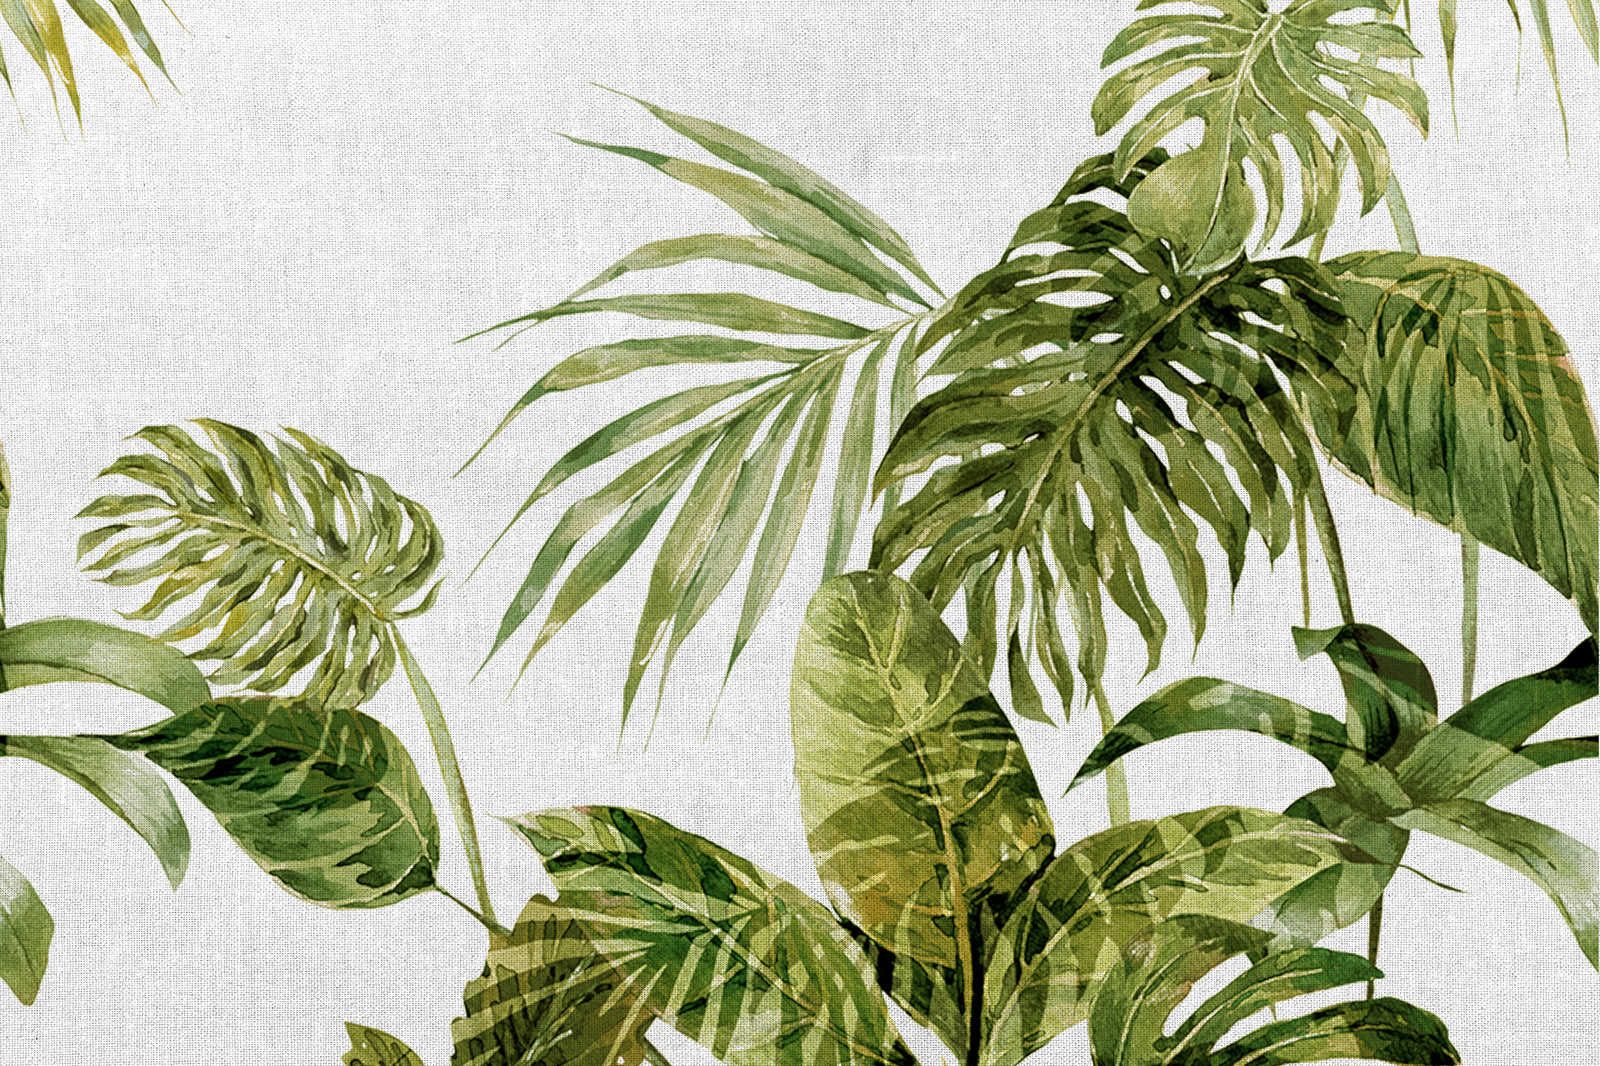             Tropisches Leinwandbild Monstera-Blättern im Aquarell Stil – 1,20 m x 0,80 m
        